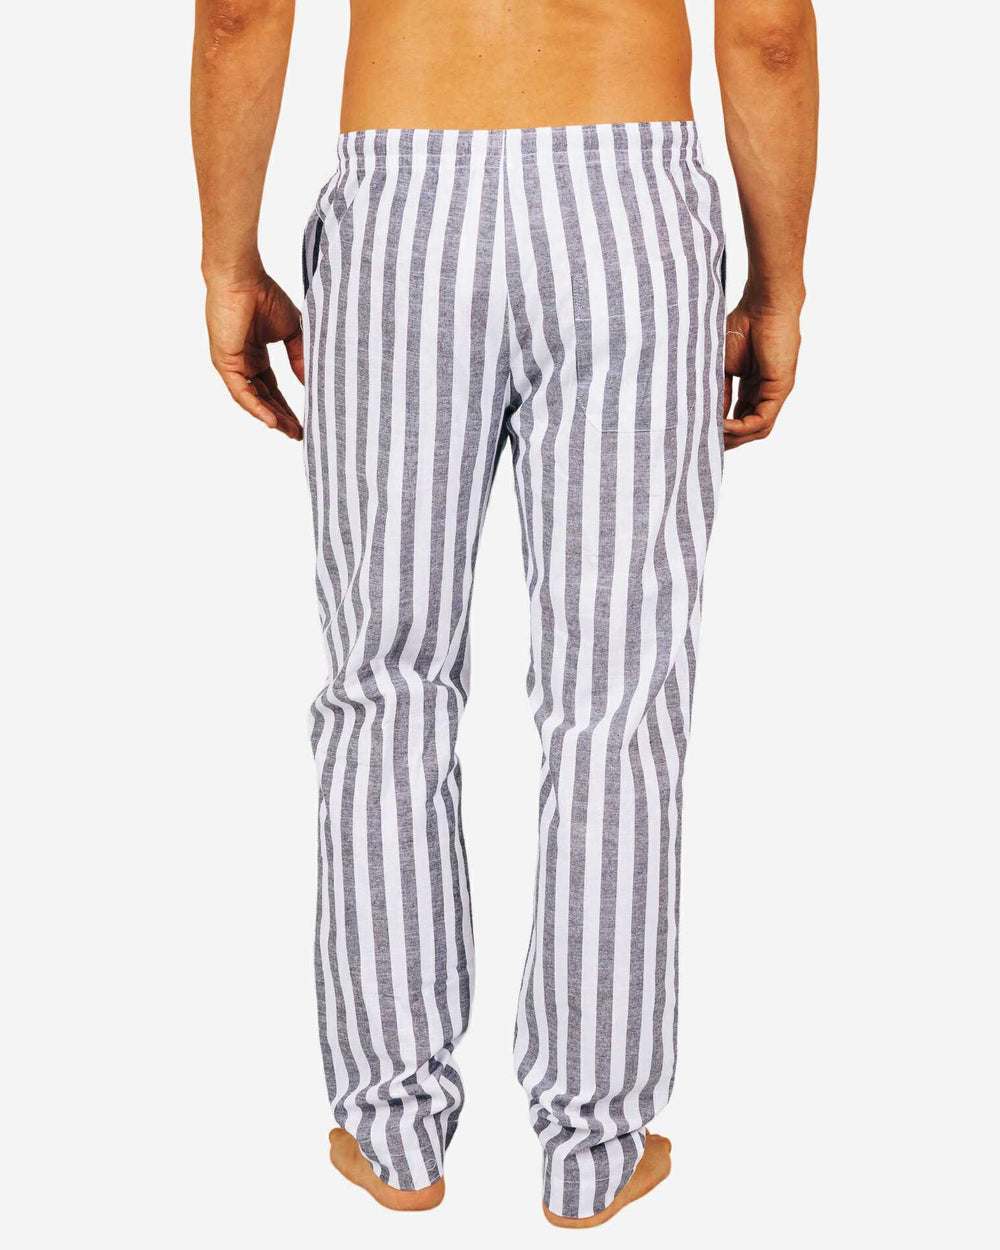 mens pyjama bottoms